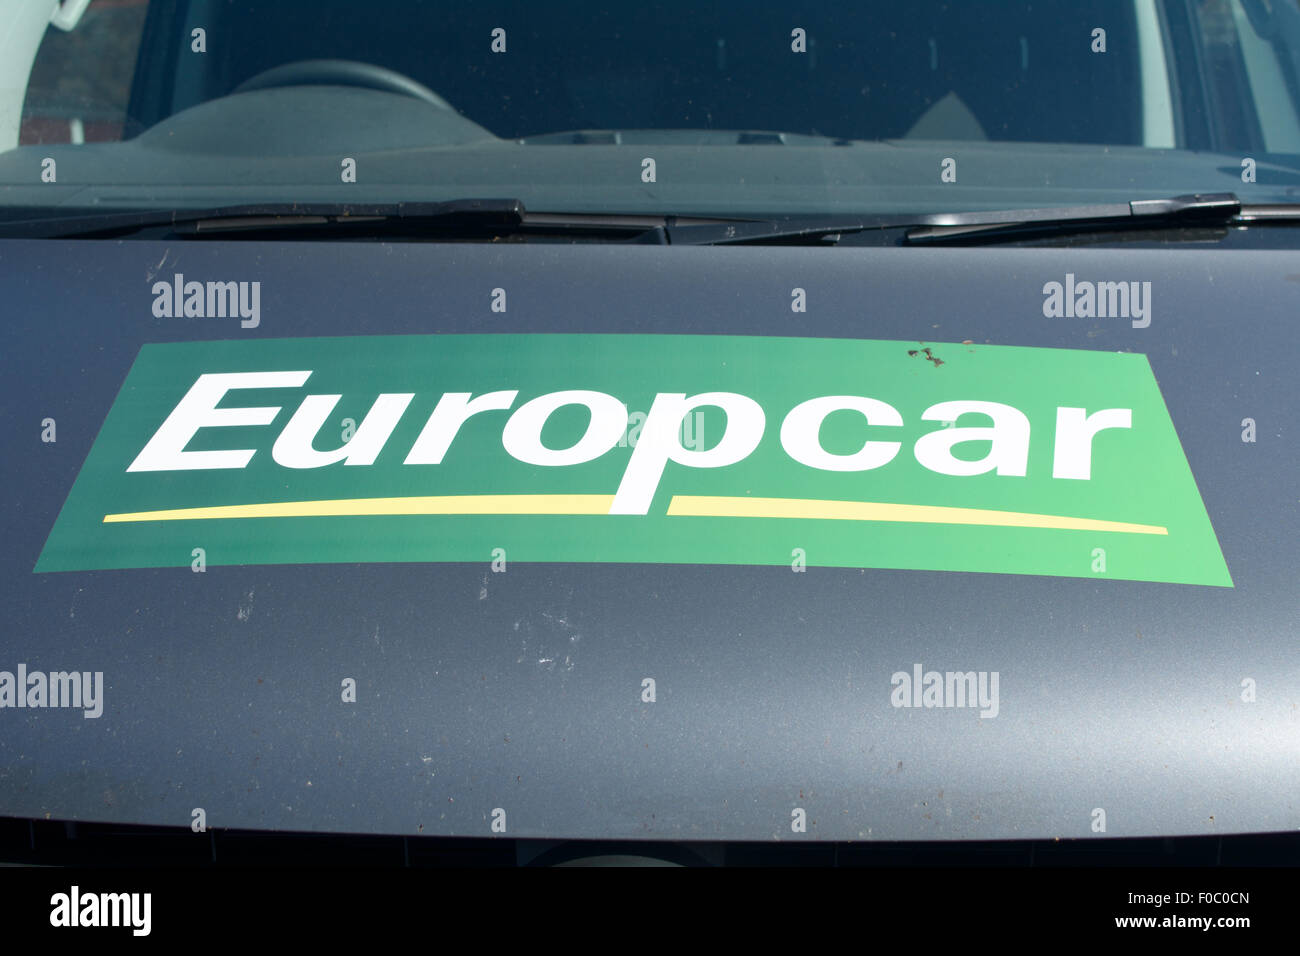 Europcar sign on bonnet of hire van Stock Photo